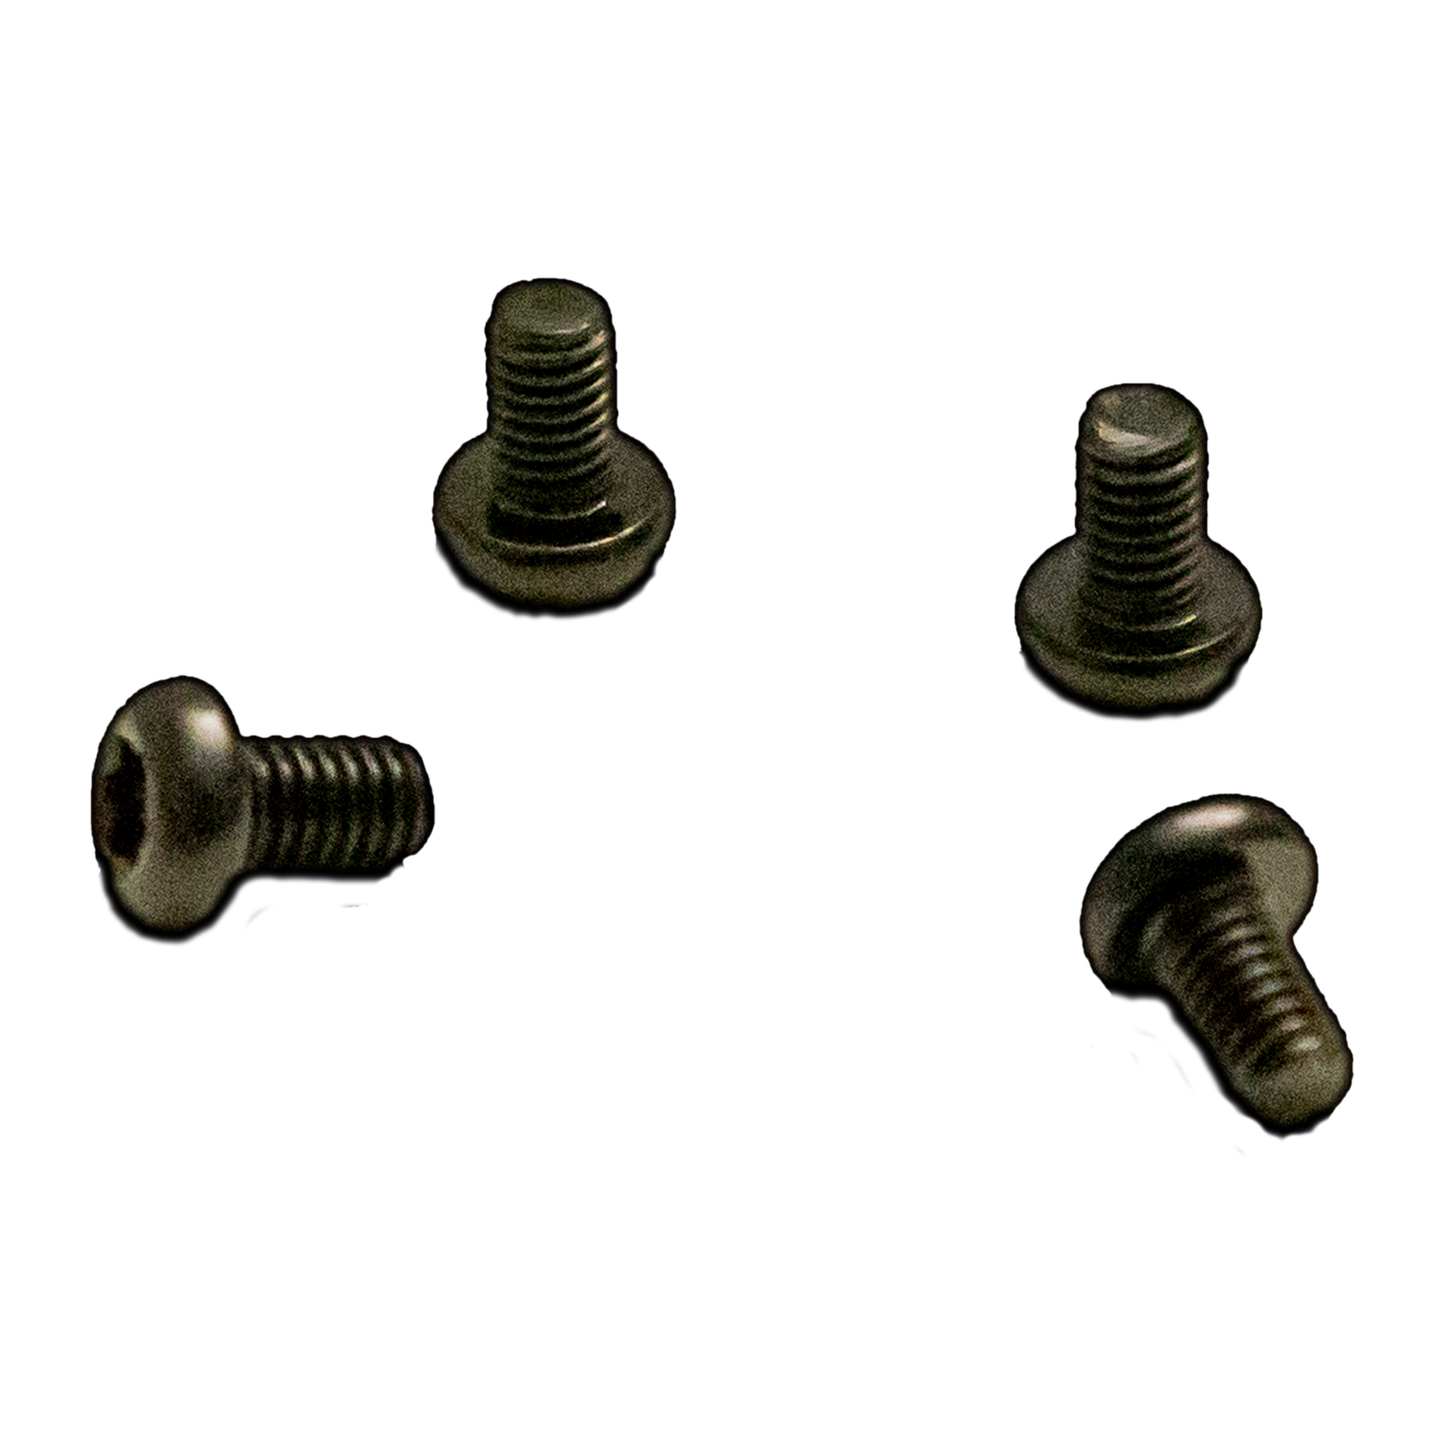 a set of screws on a black background